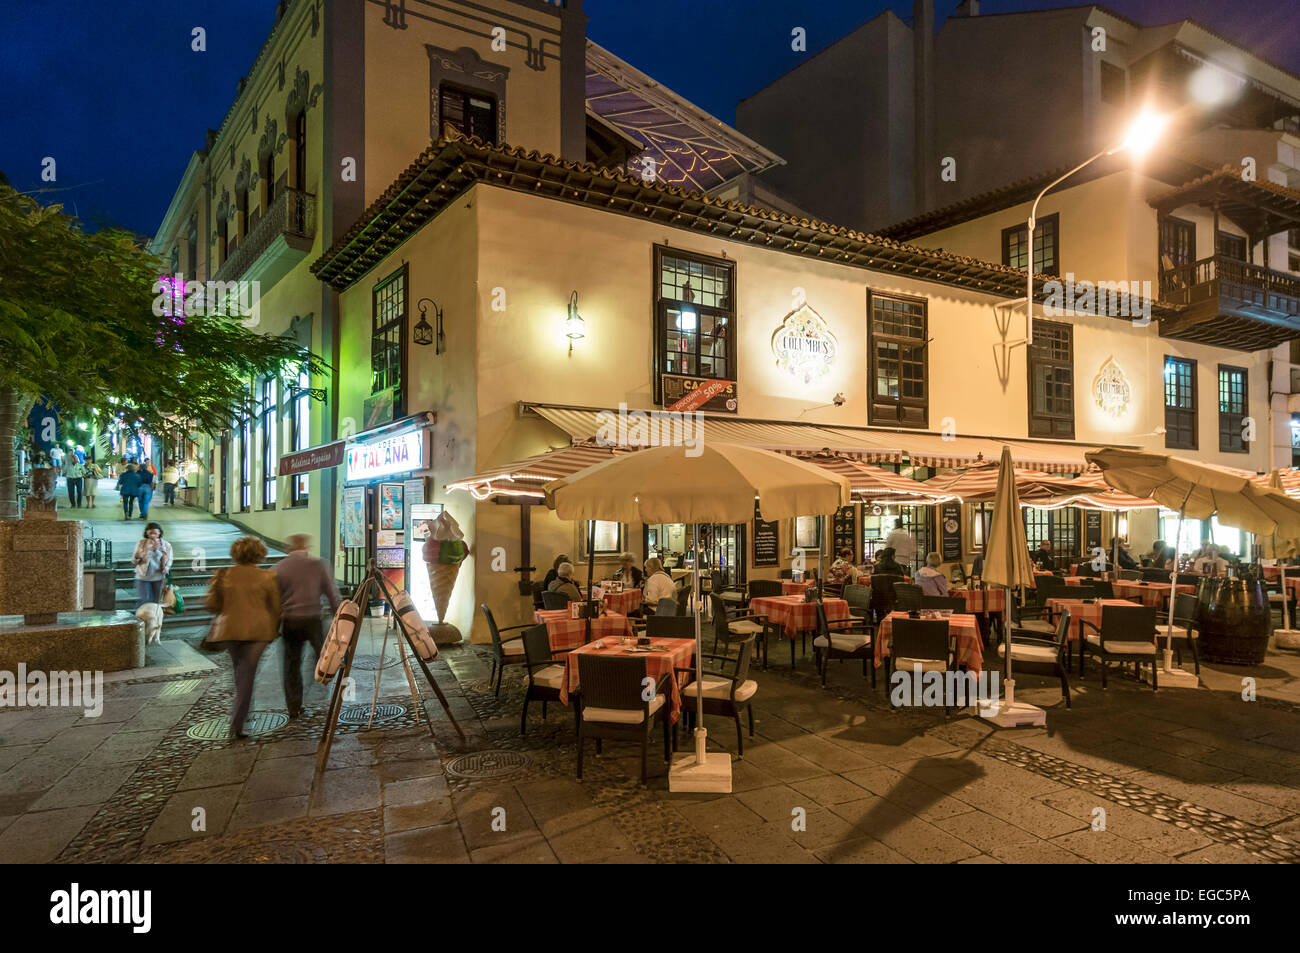 Puerto de la Cruz, Cafe Columbus, ristorante, persone, Isole Canarie, Spagna Foto Stock